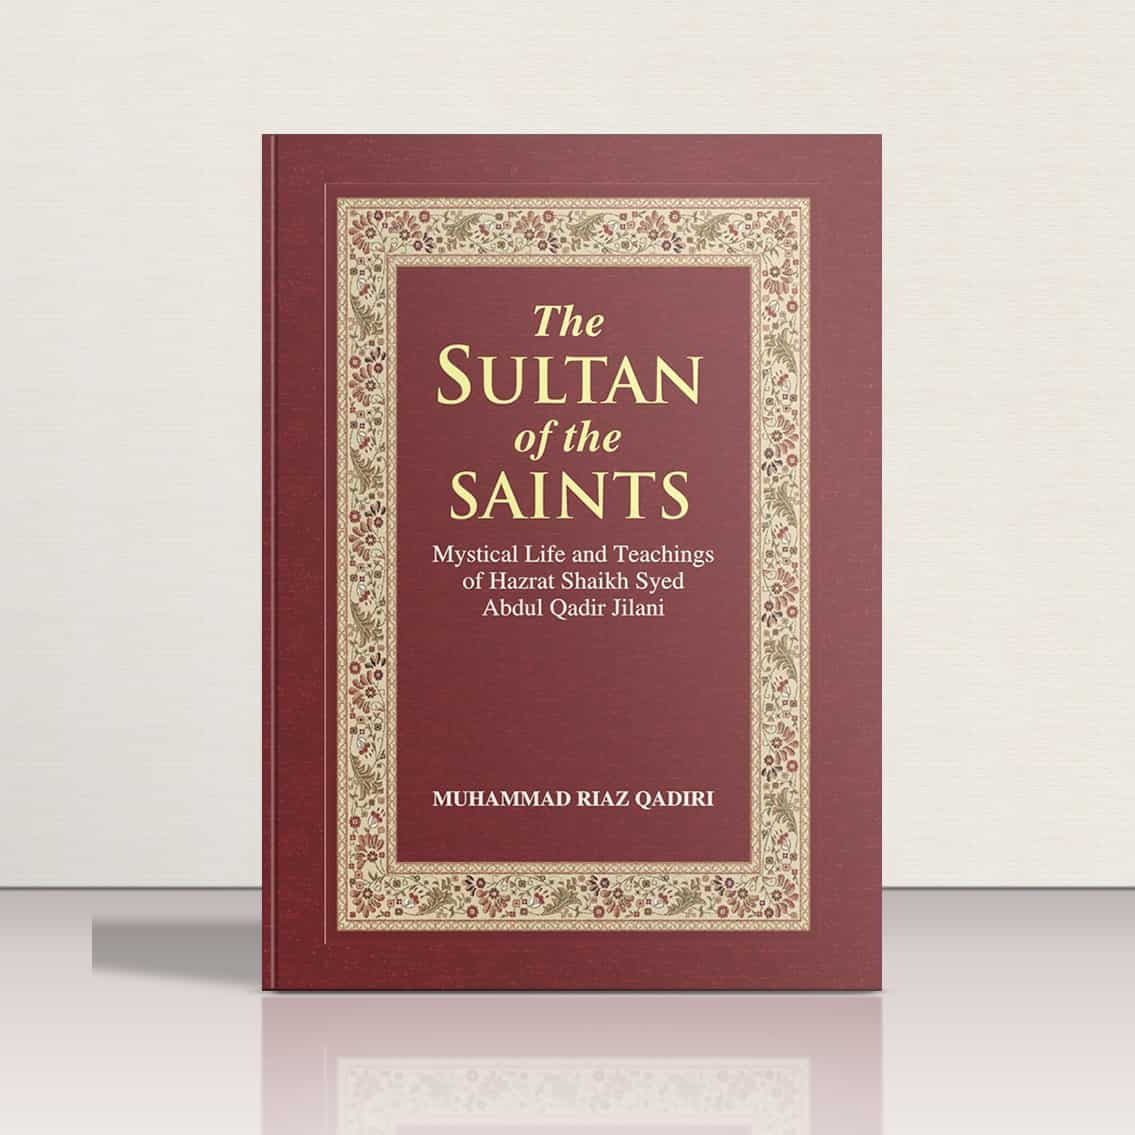 The Sultan of the Saints by Muhammad Riaz Qadiri